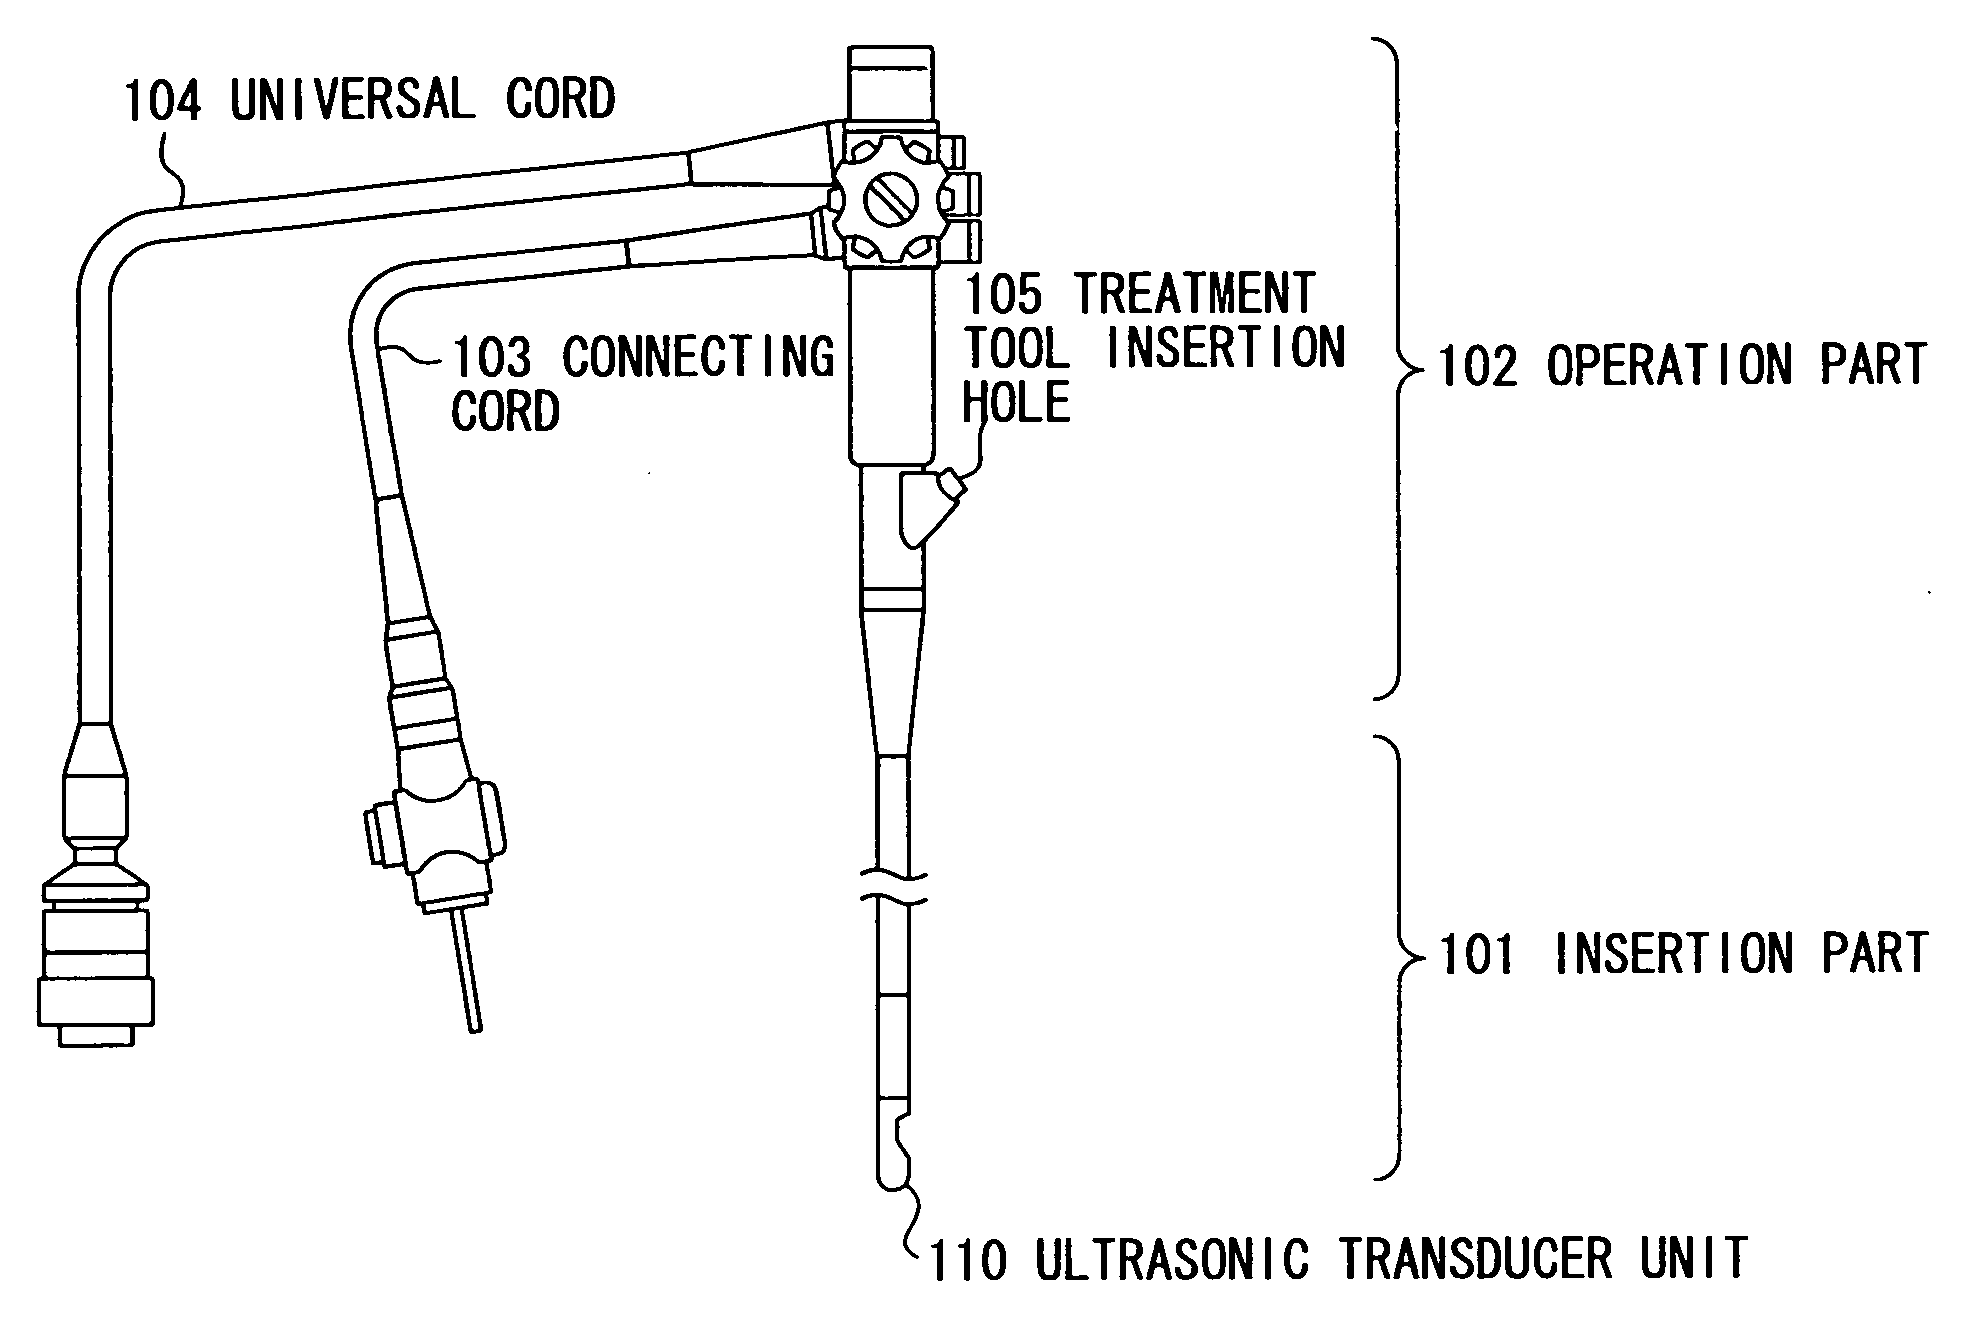 Ultrasonic observation apparatus